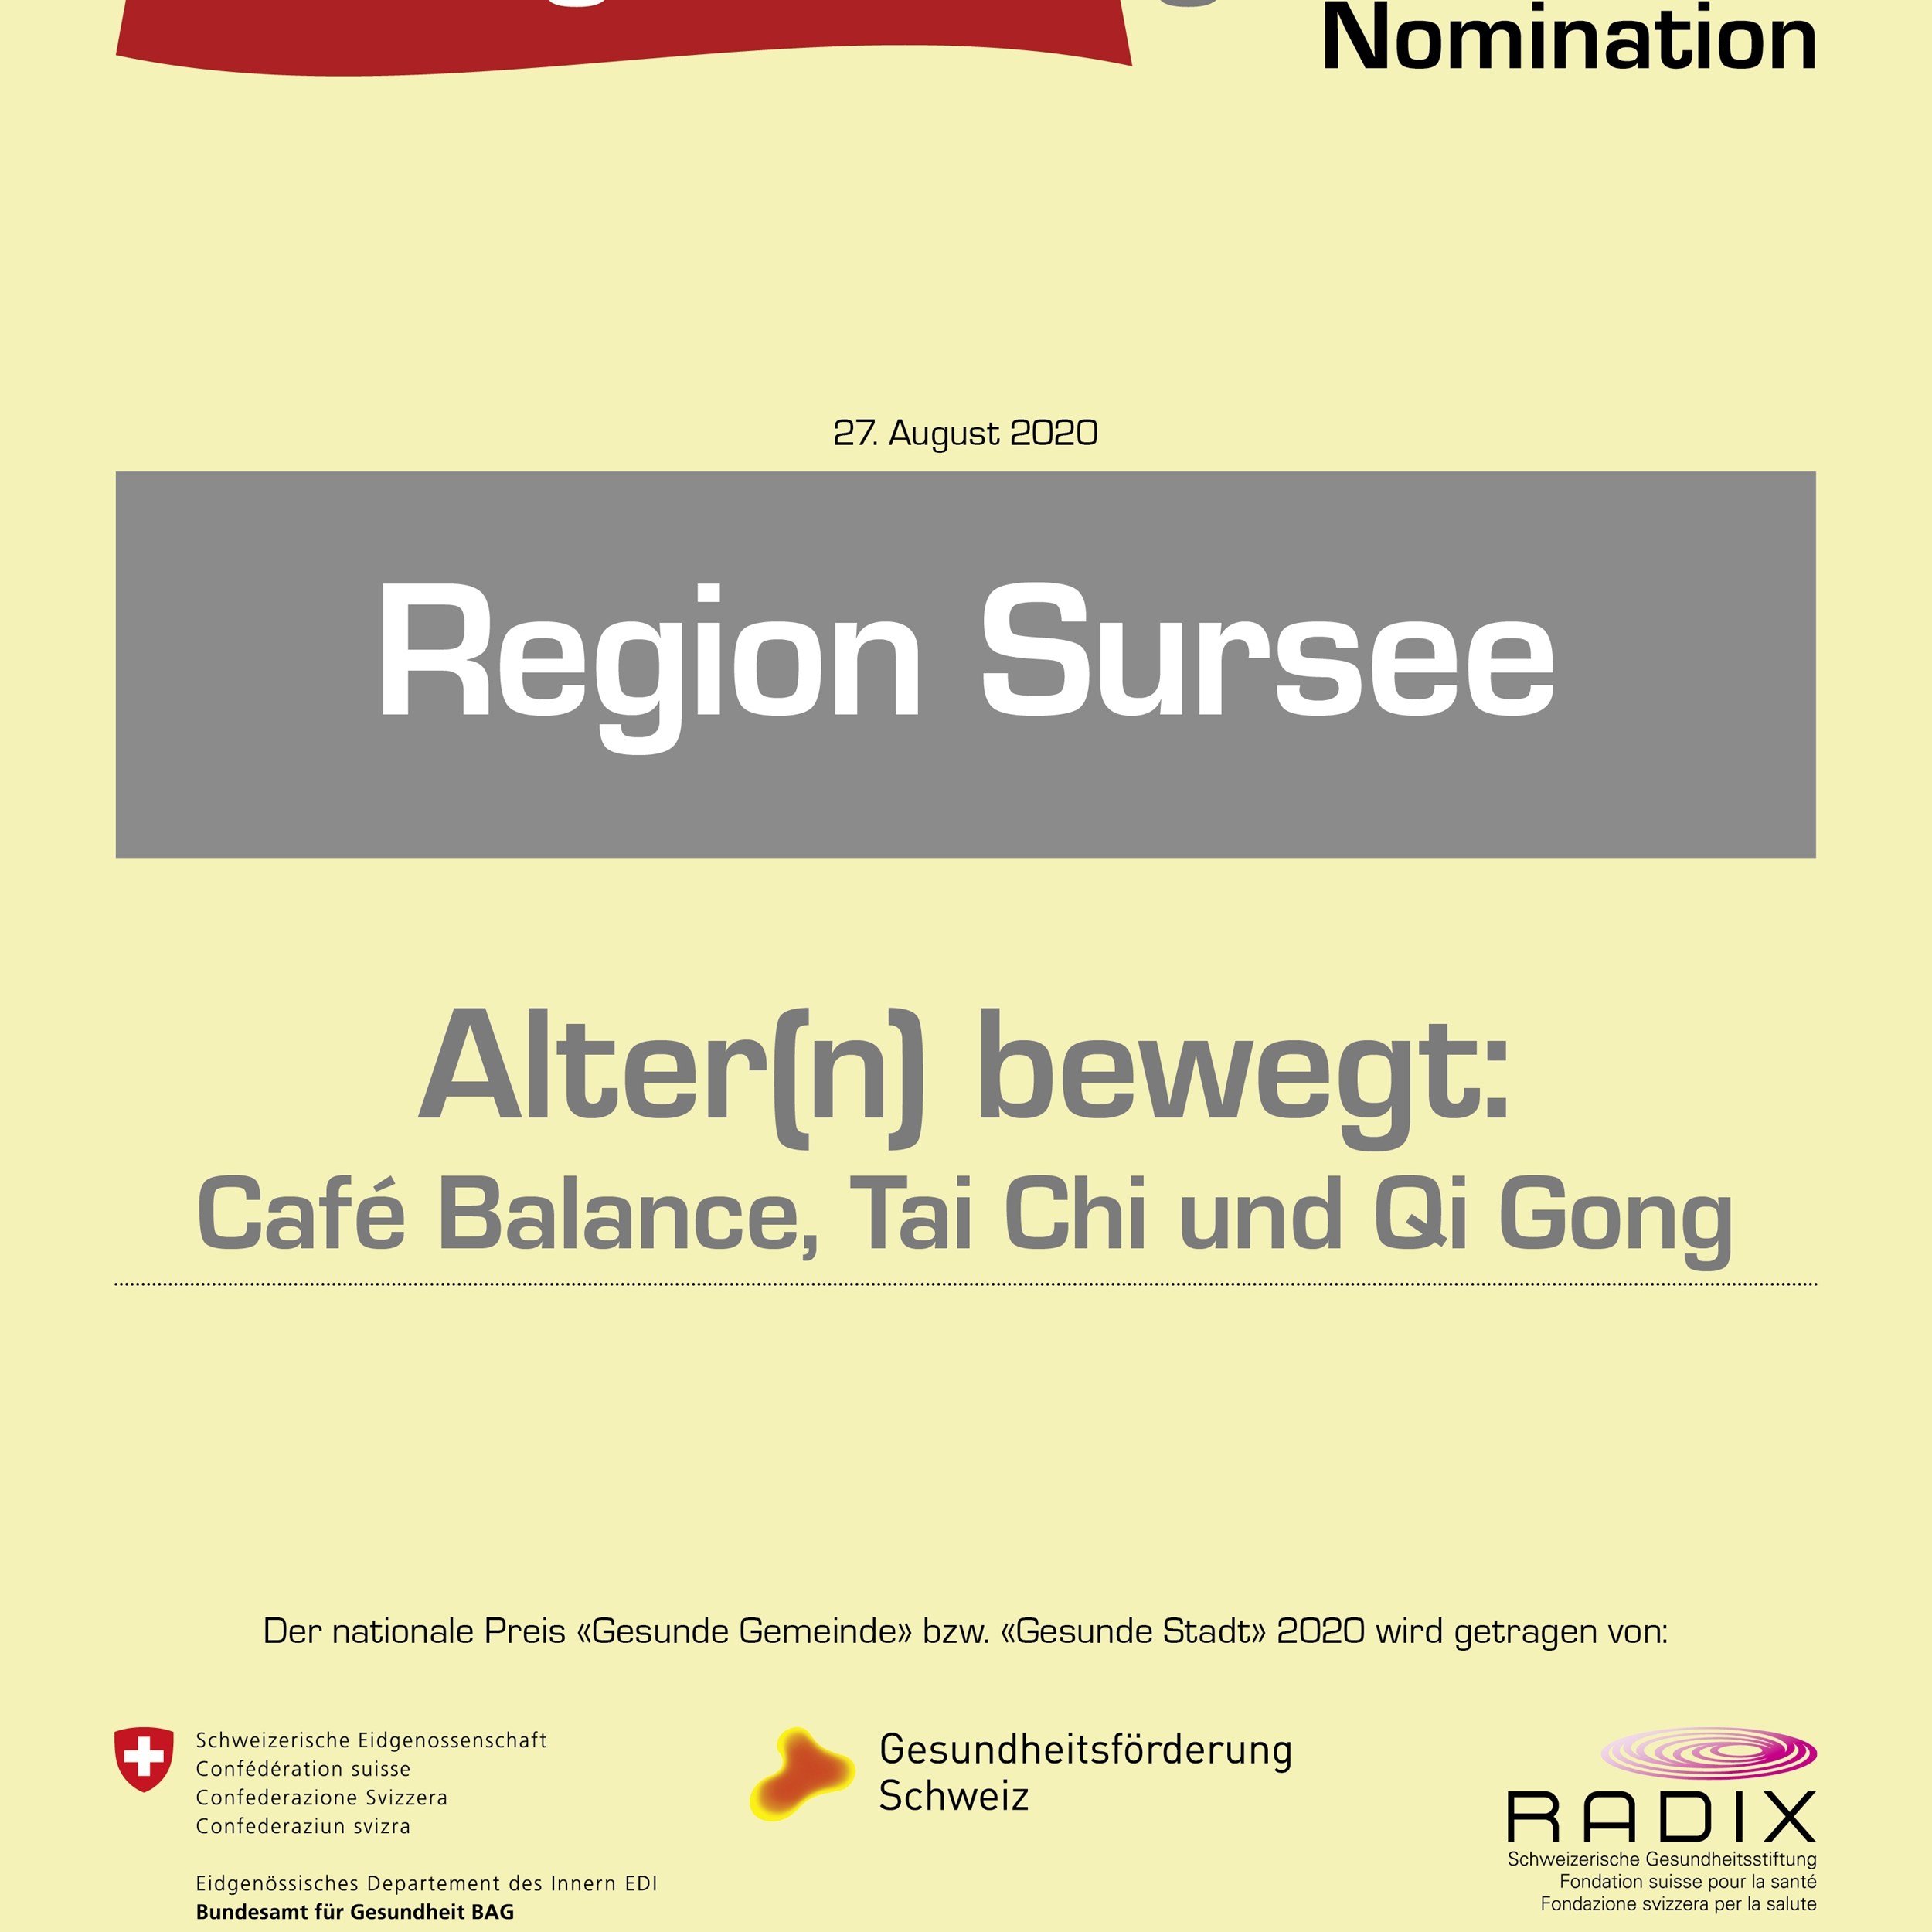 Gg Nomination 2020 Region Sursee